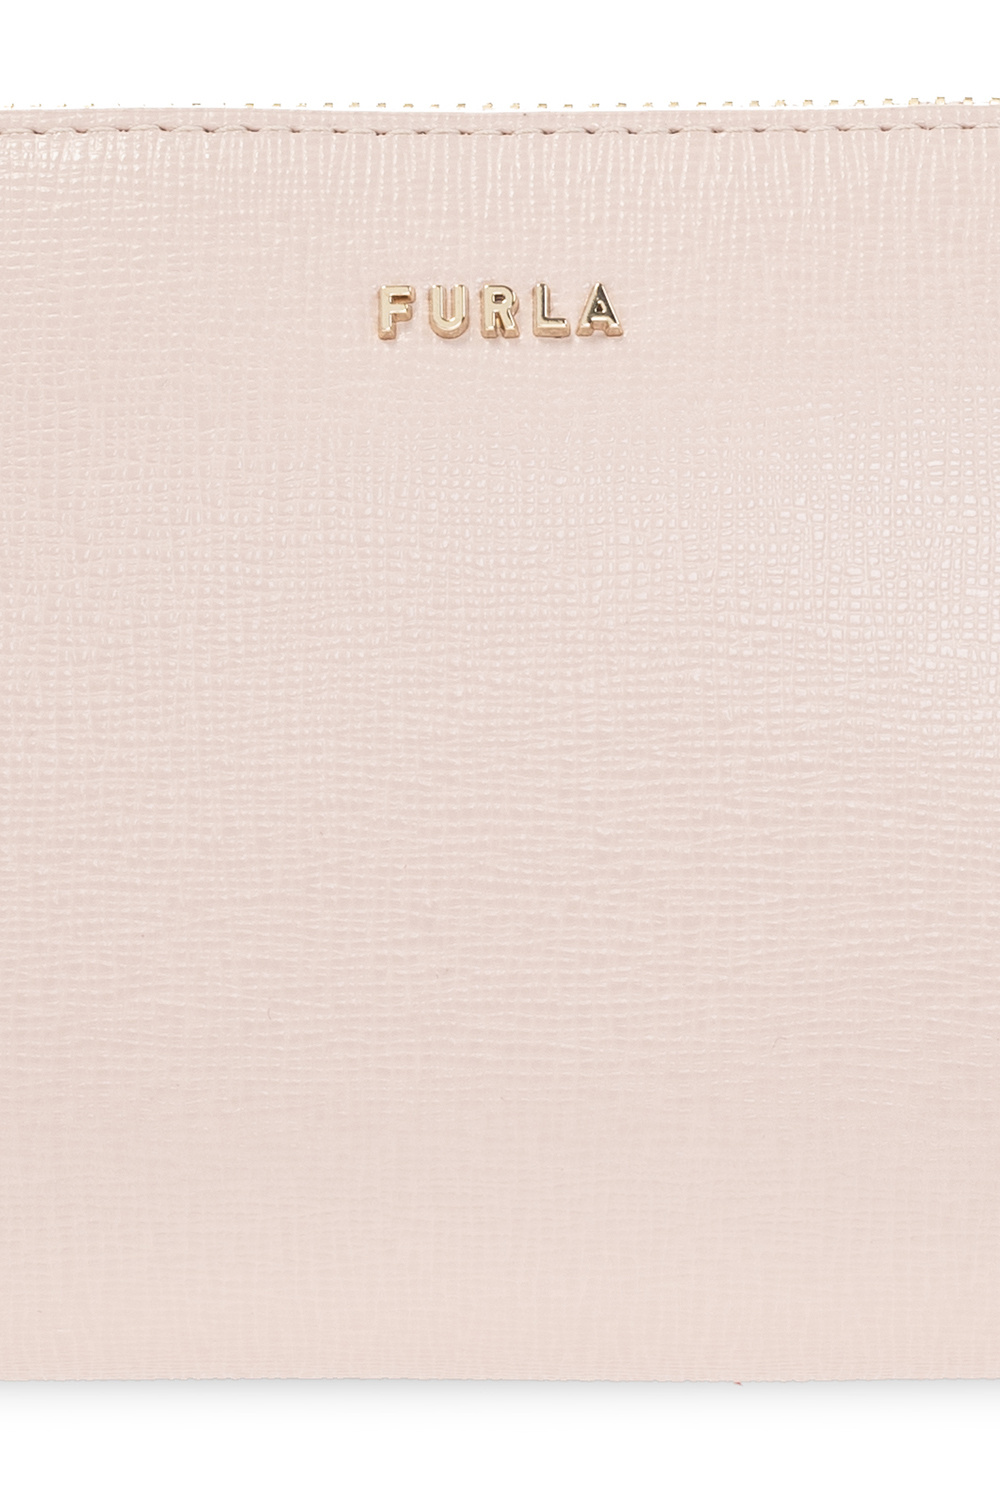 Furla ‘Electra’ leather wash bag